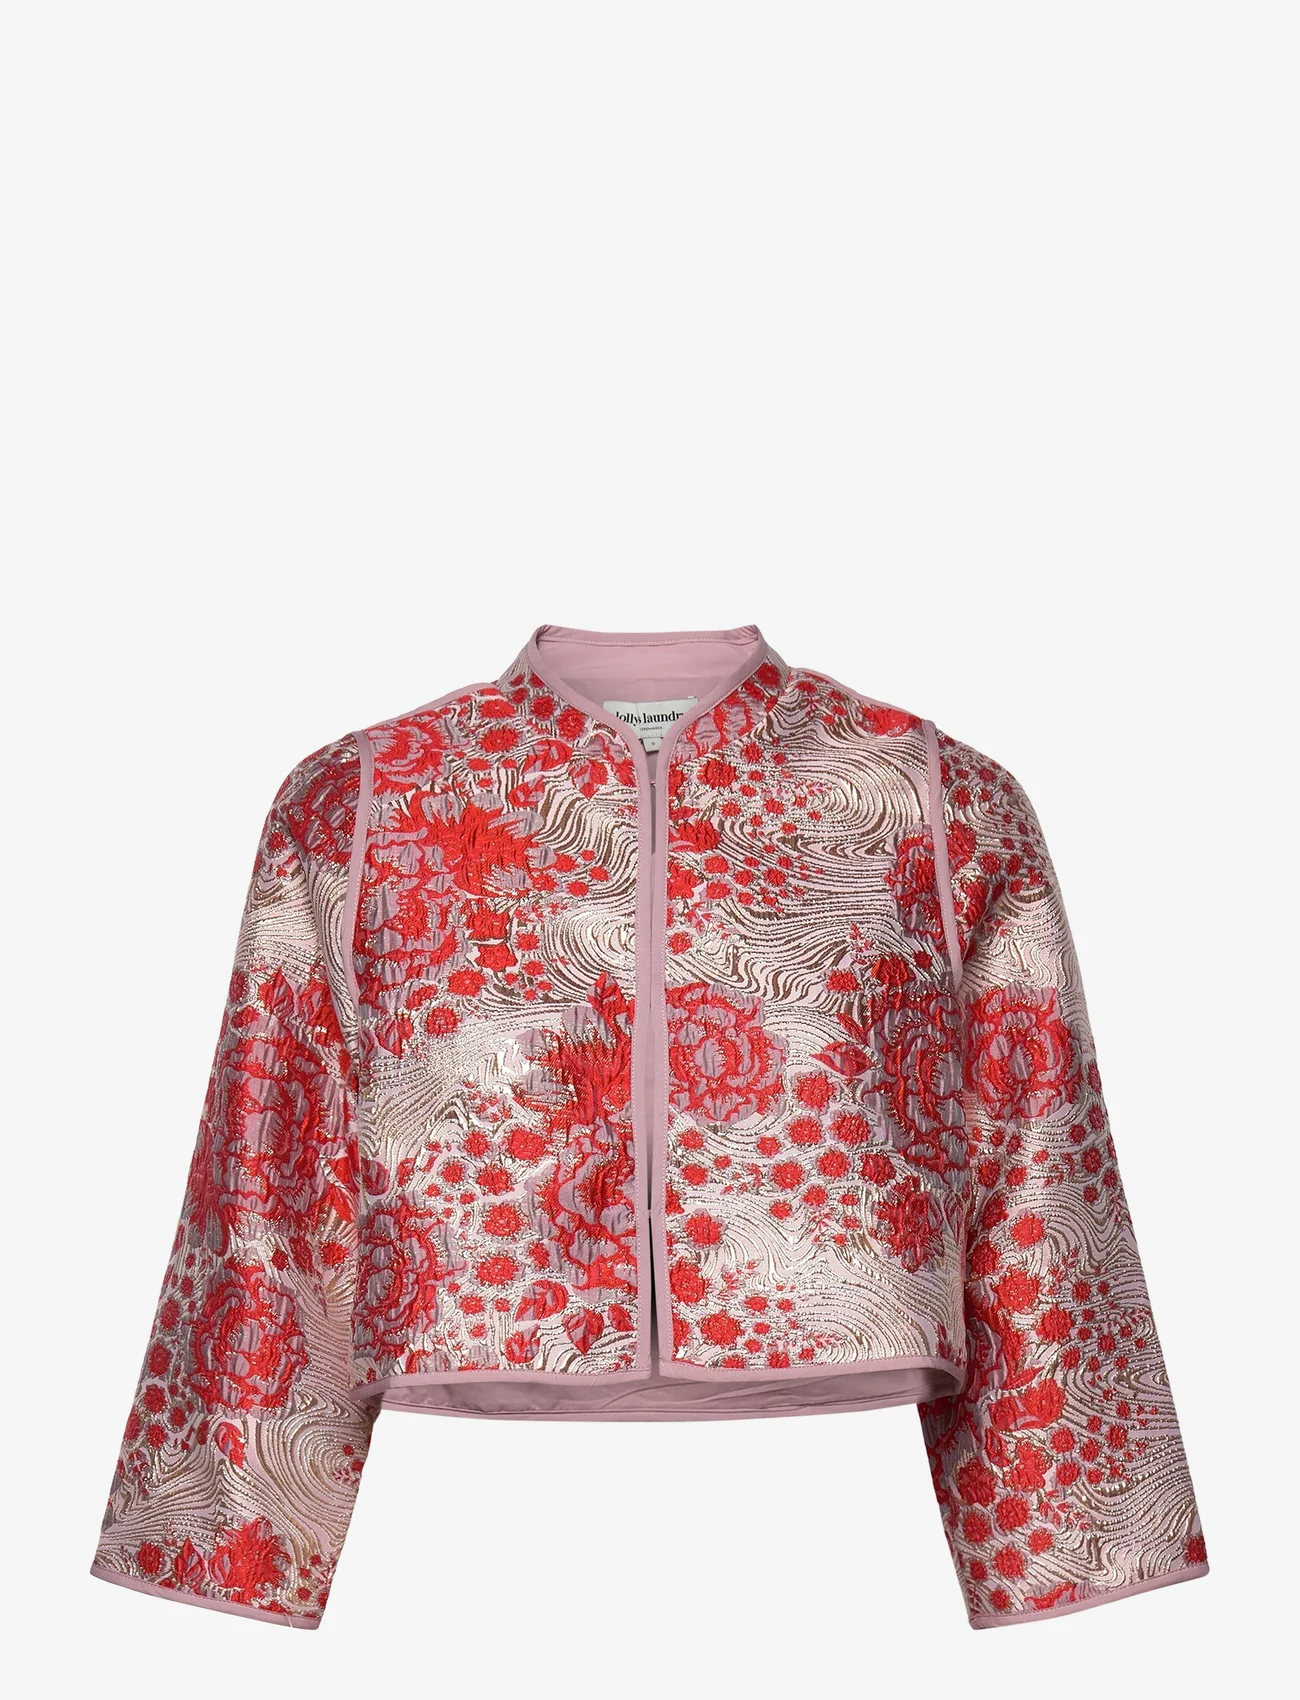 Lollys Laundry - Miriam Jacket - ballīšu apģērbs par outlet cenām - 90 coral - 0